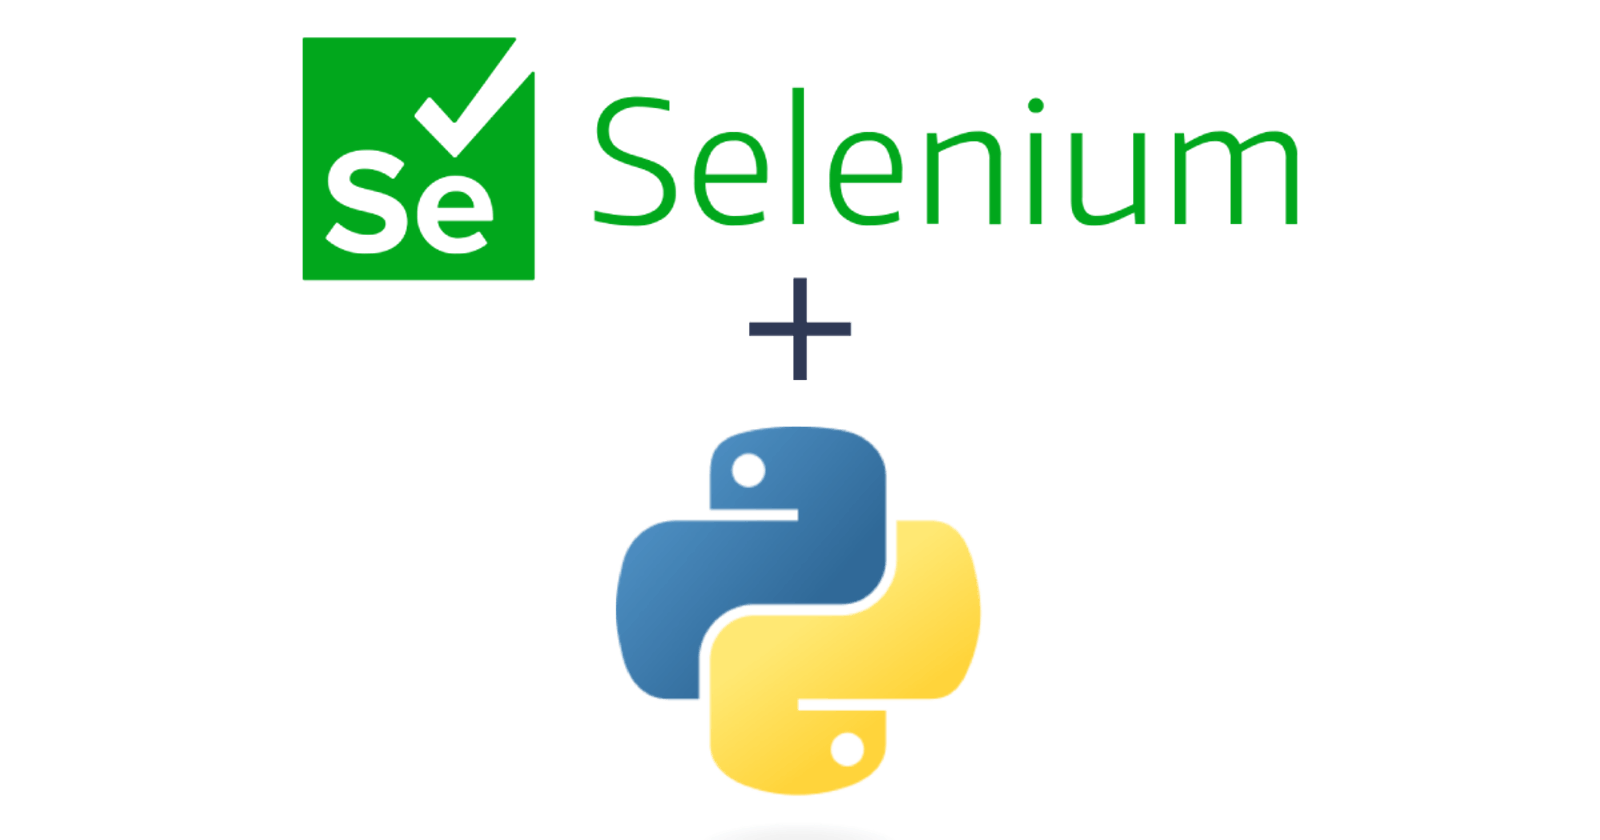 Using Selenium Webdriver with Python's unittest framework